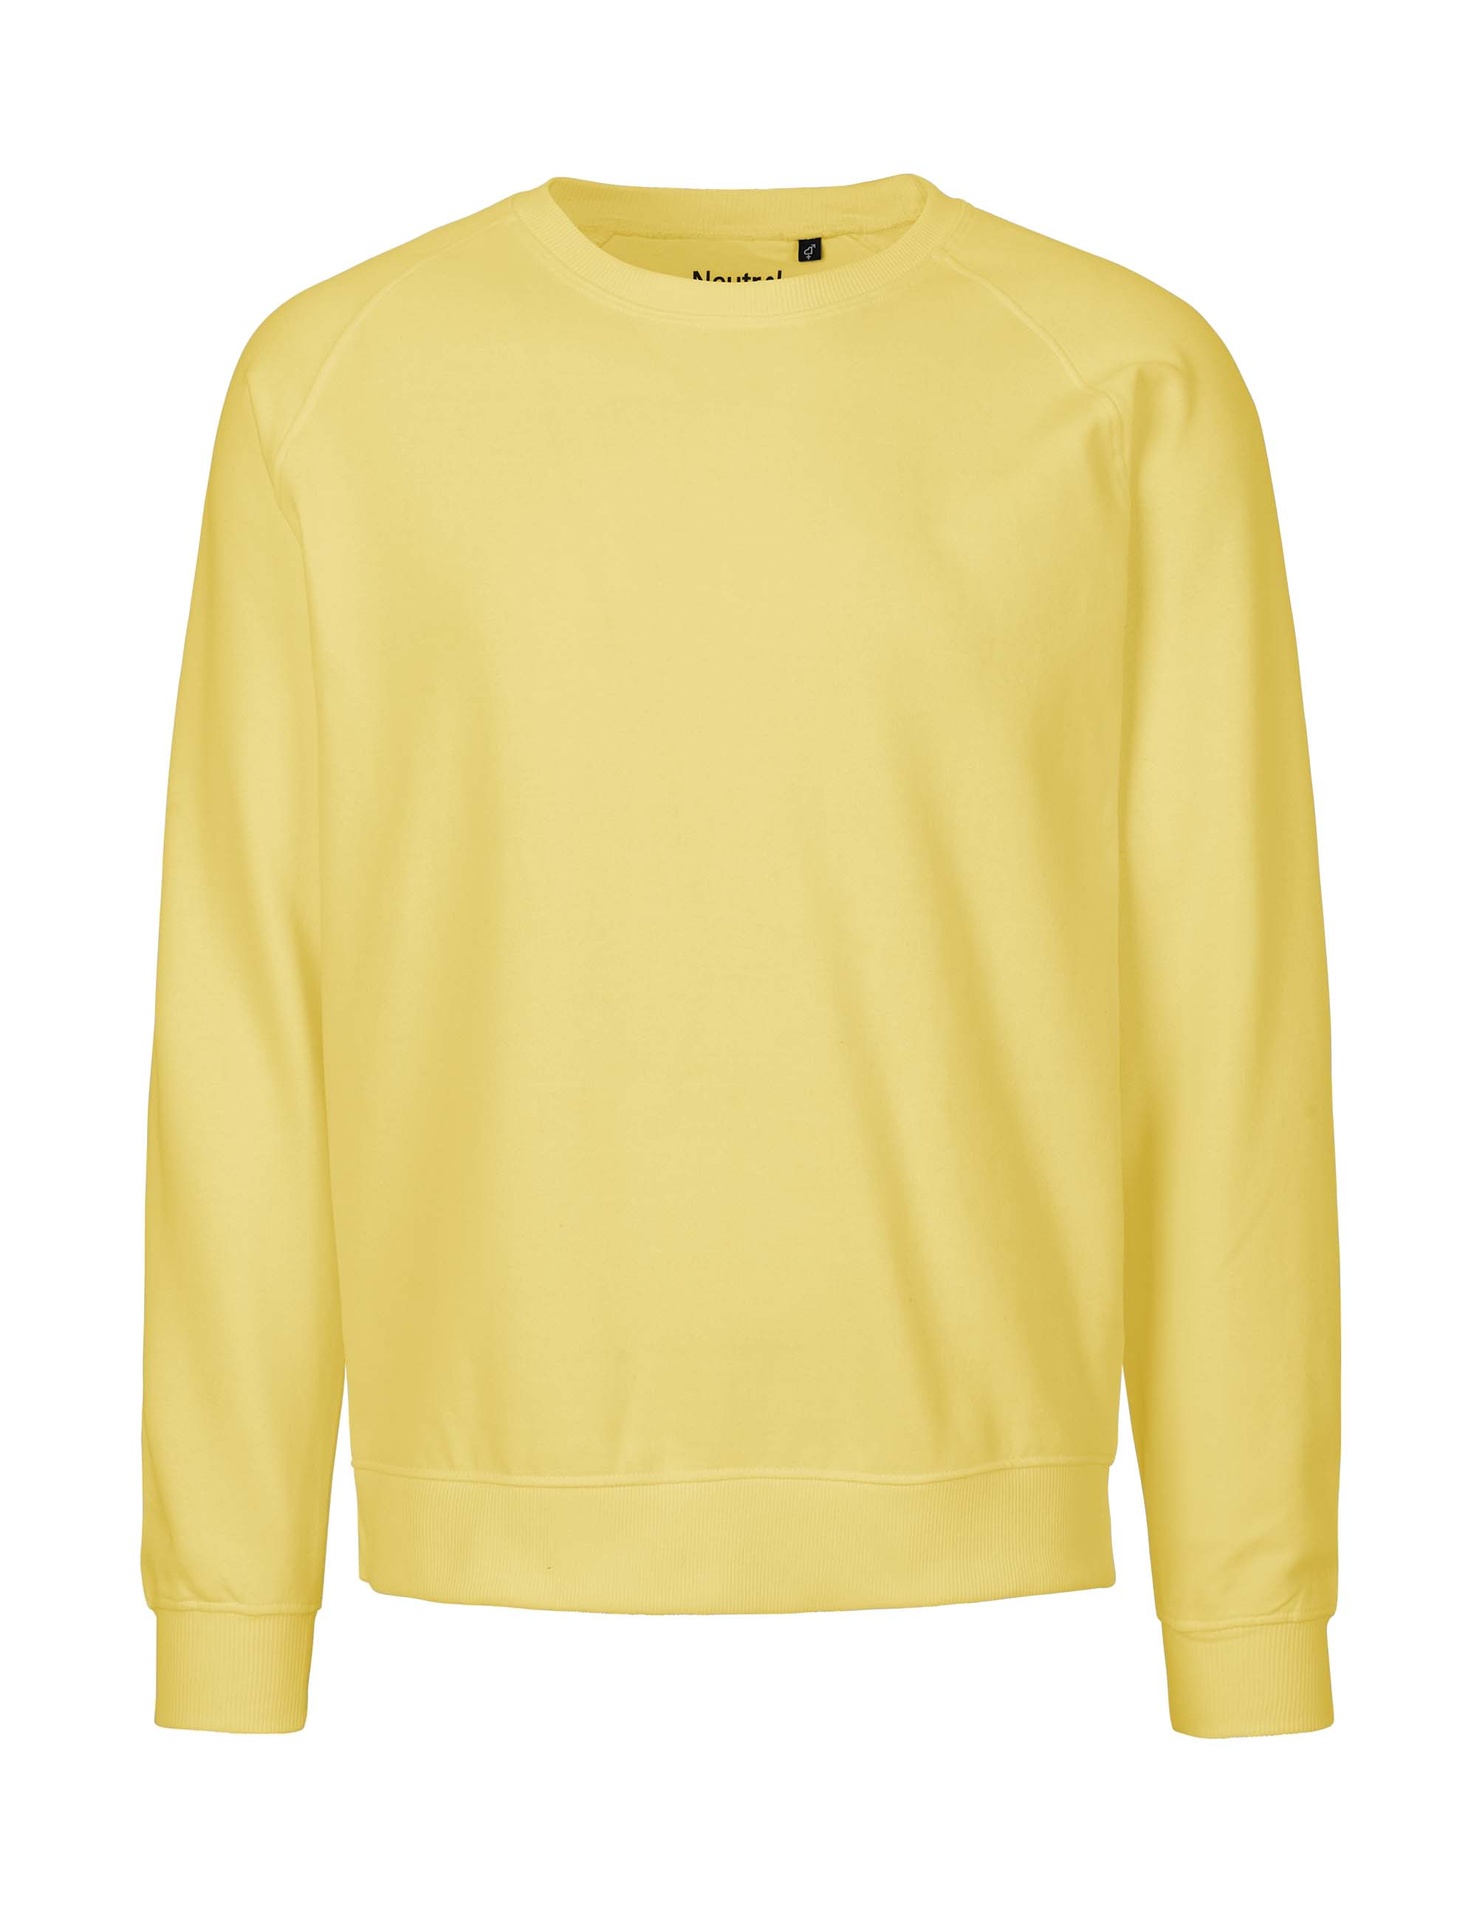 [PR/02853] Unisex Sweatshirt (Dusty Yellow 43, L)